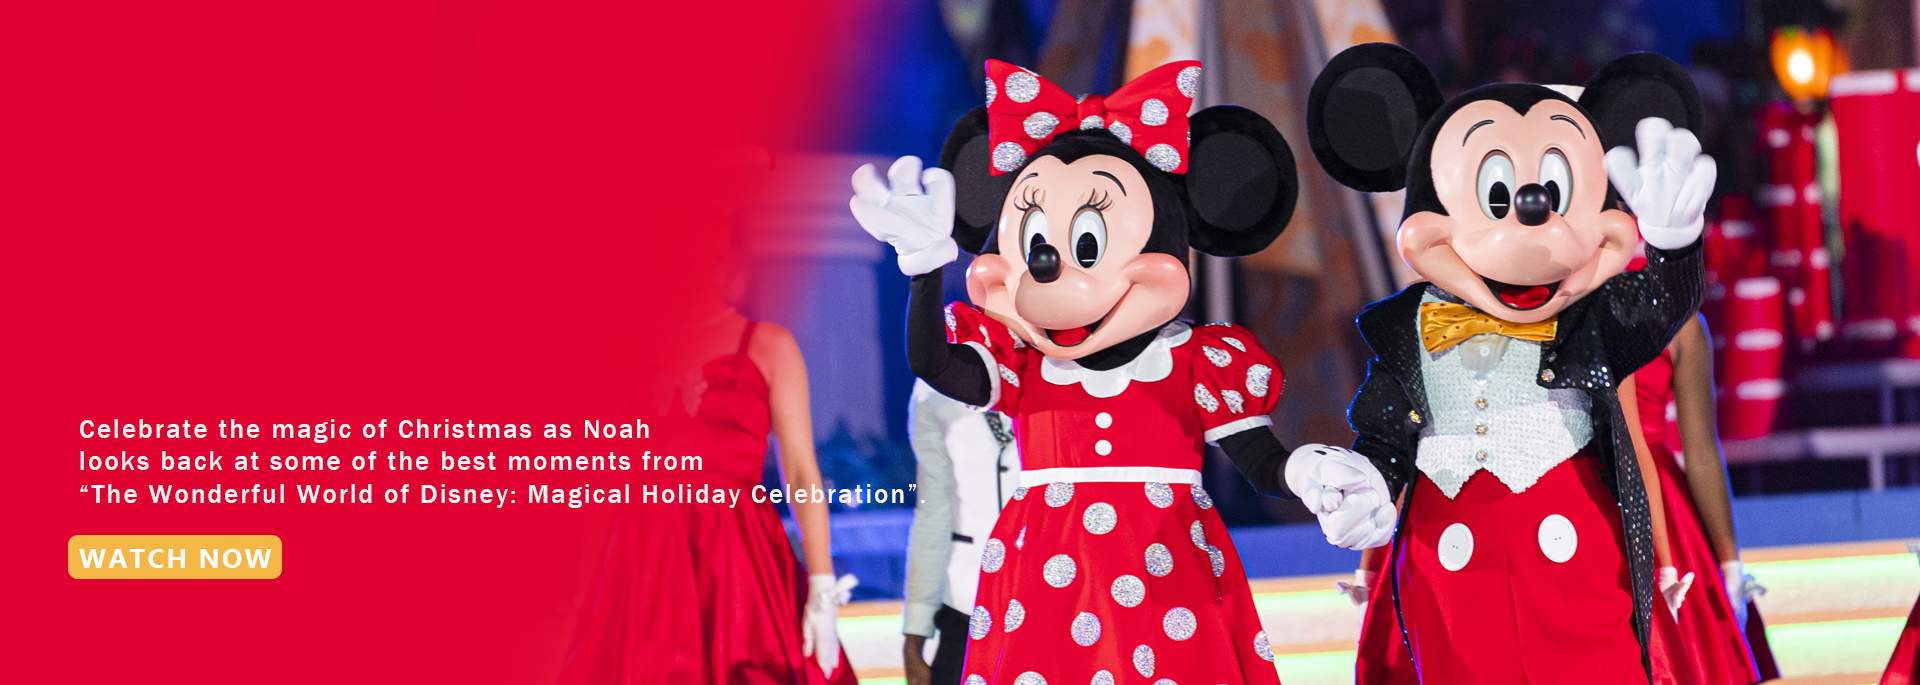 The Wonderful World of Disney: Magical Holiday Celebration Pre-Show